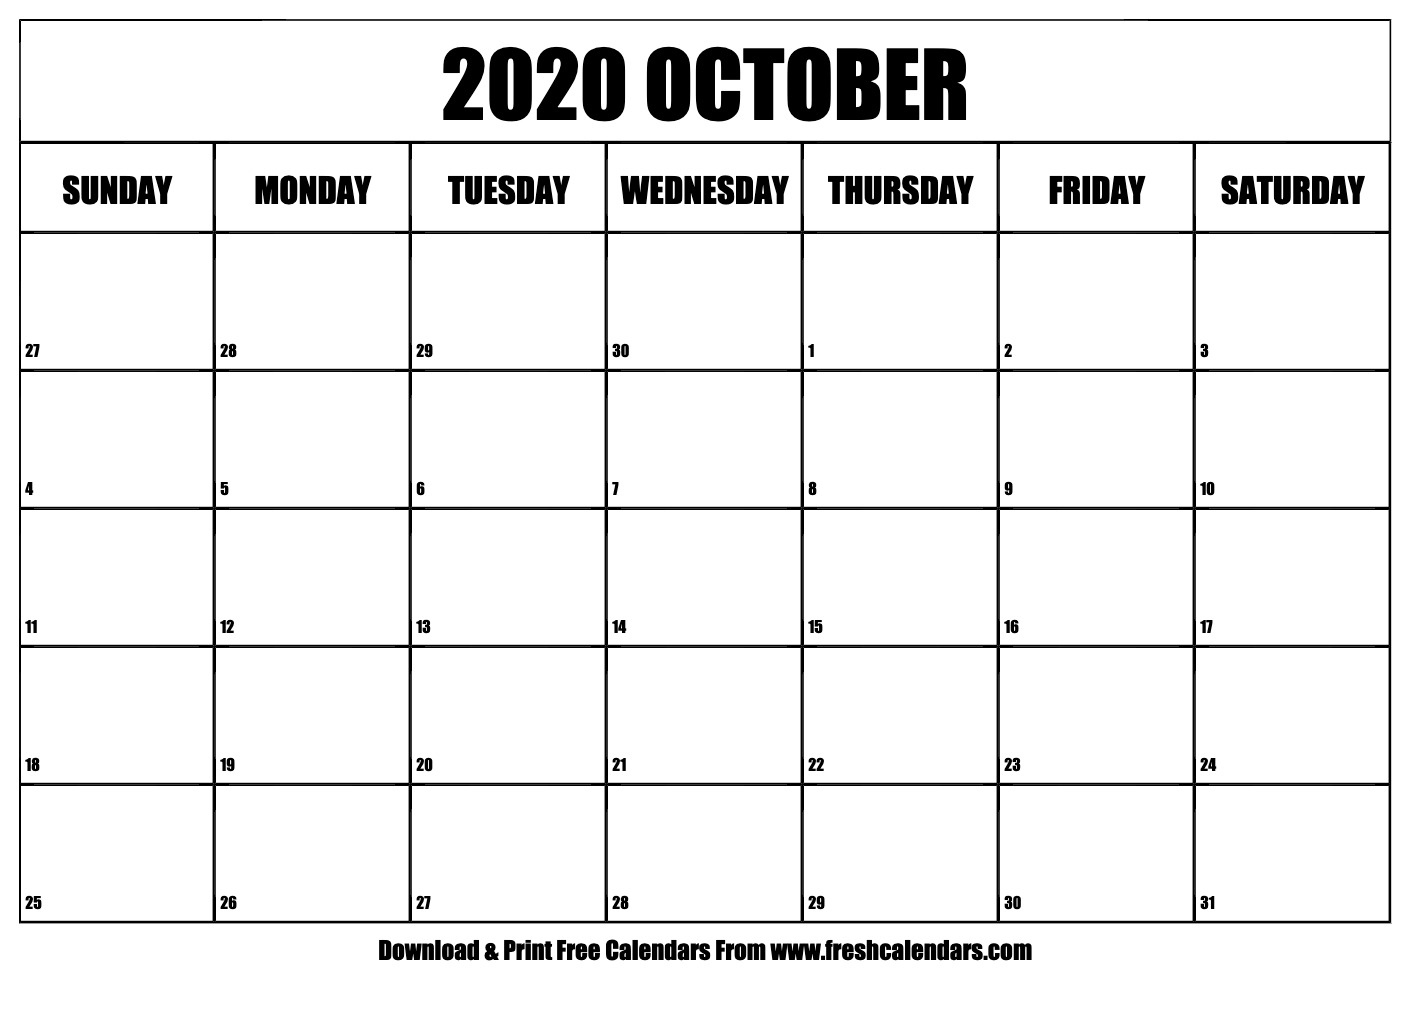 October 2020 Calendar Printable - Fresh Calendars